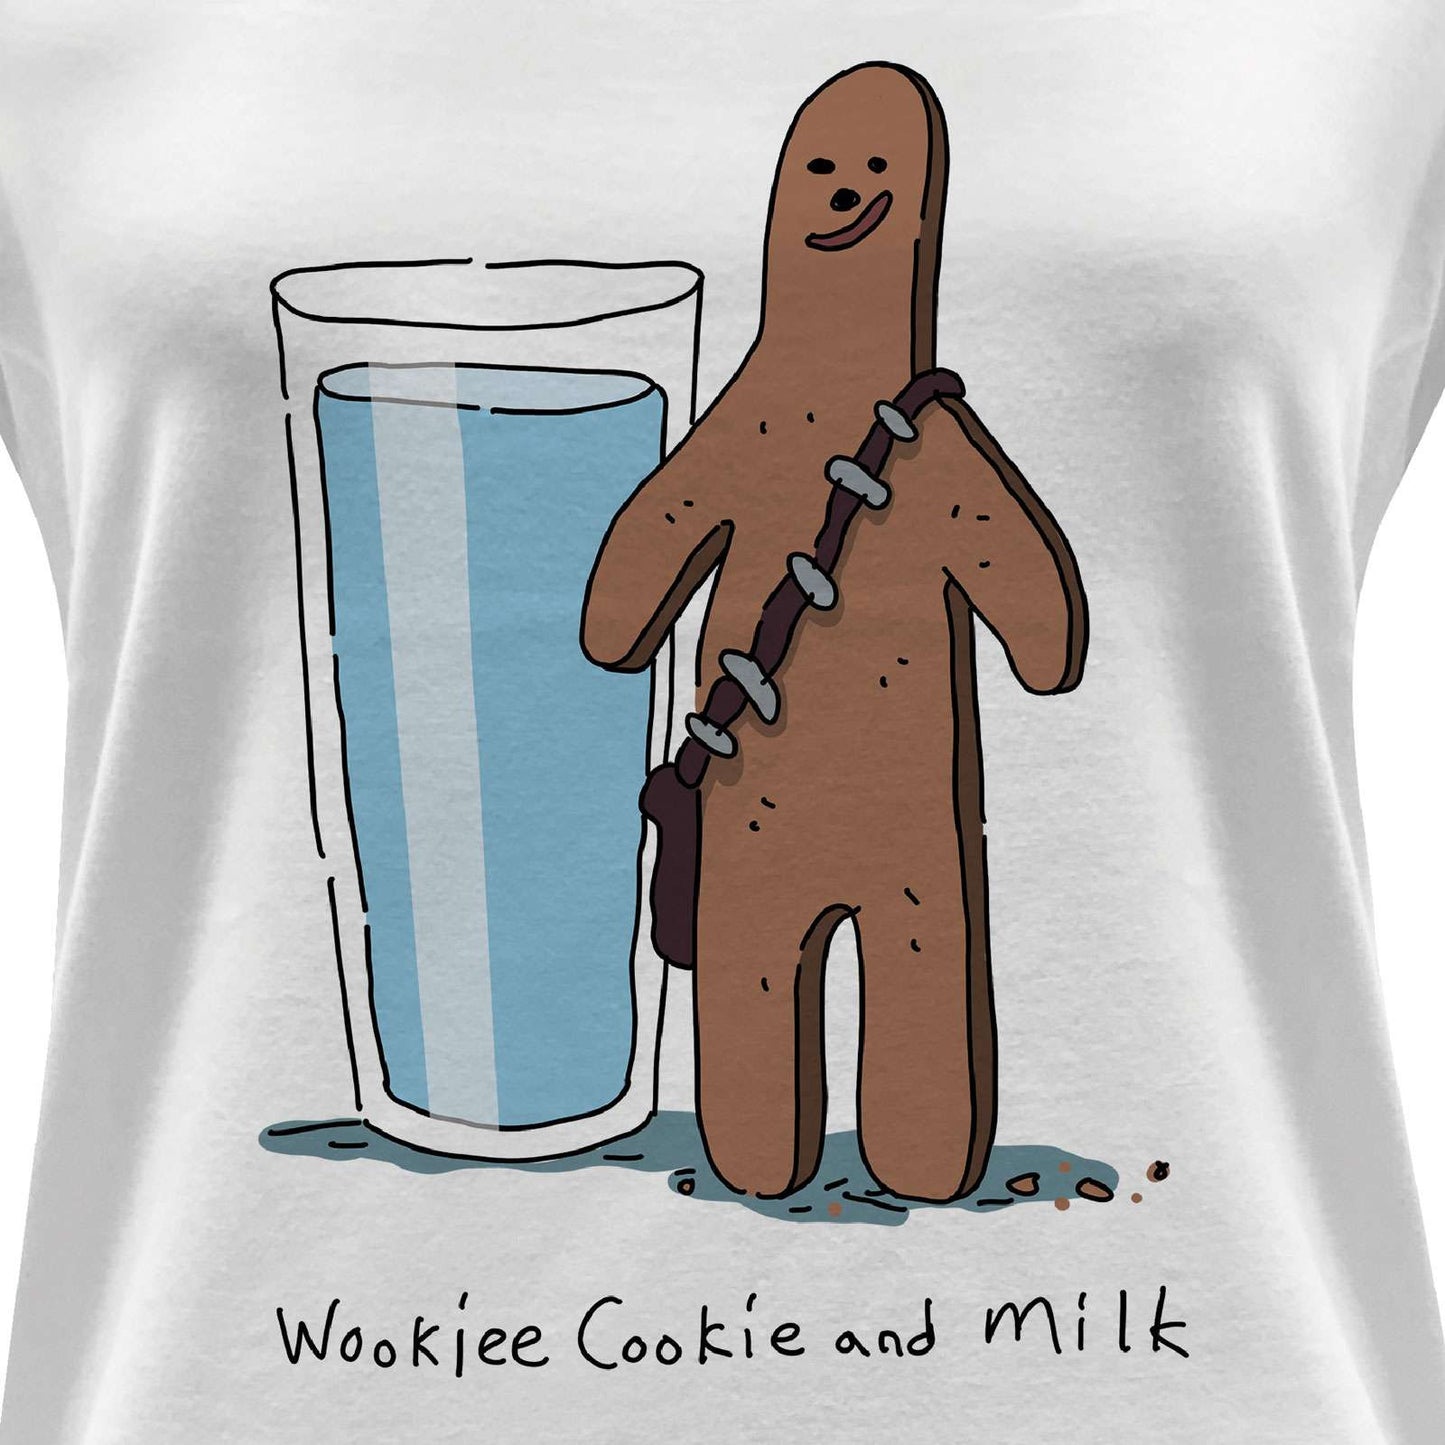 Star Wars Women's T-shirt - Wookiee Cookie And Milk